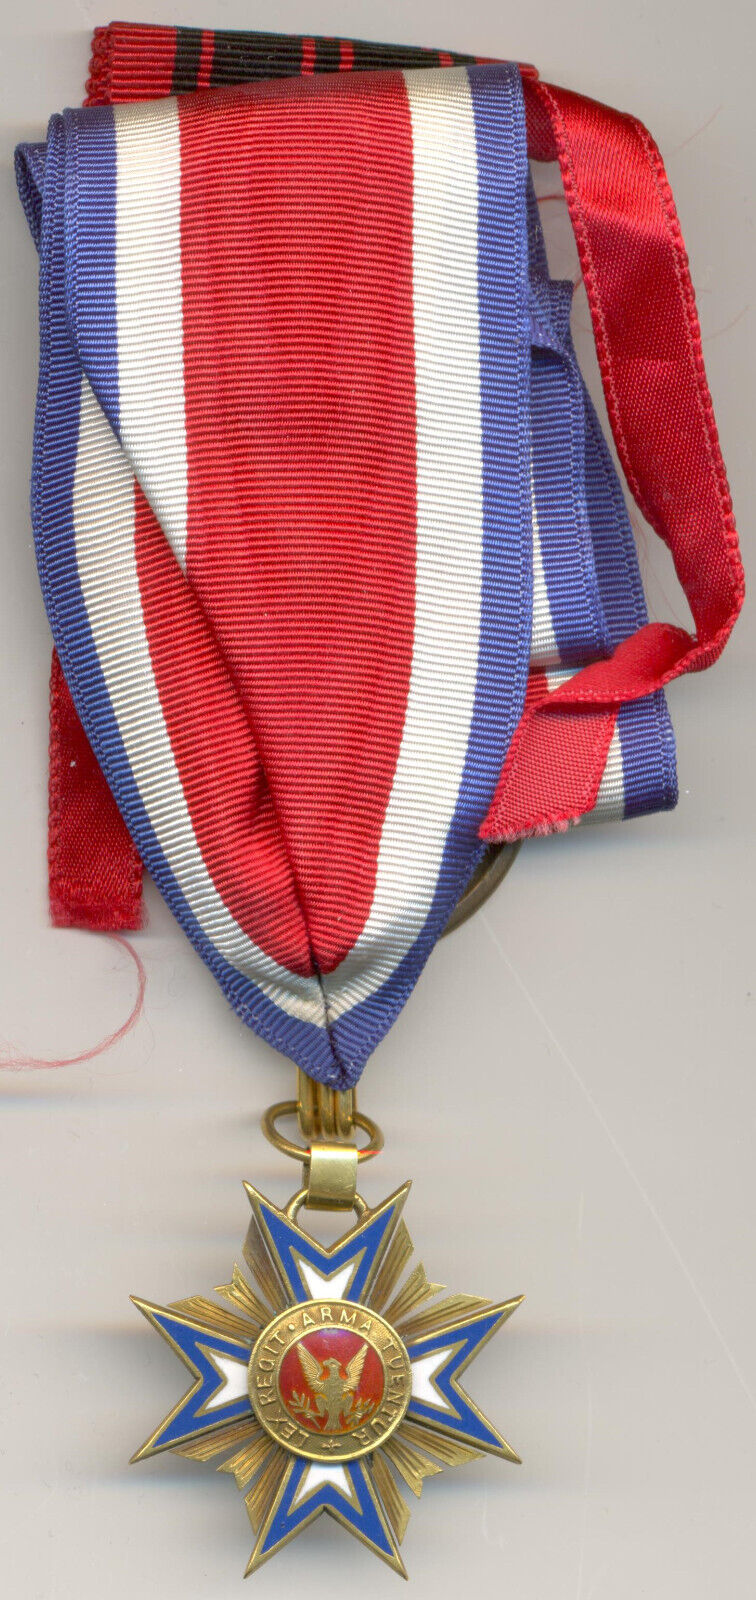 Military Order of the Loyal Legion, Hereditary Companion, MOLLUS Medal s/n 19671